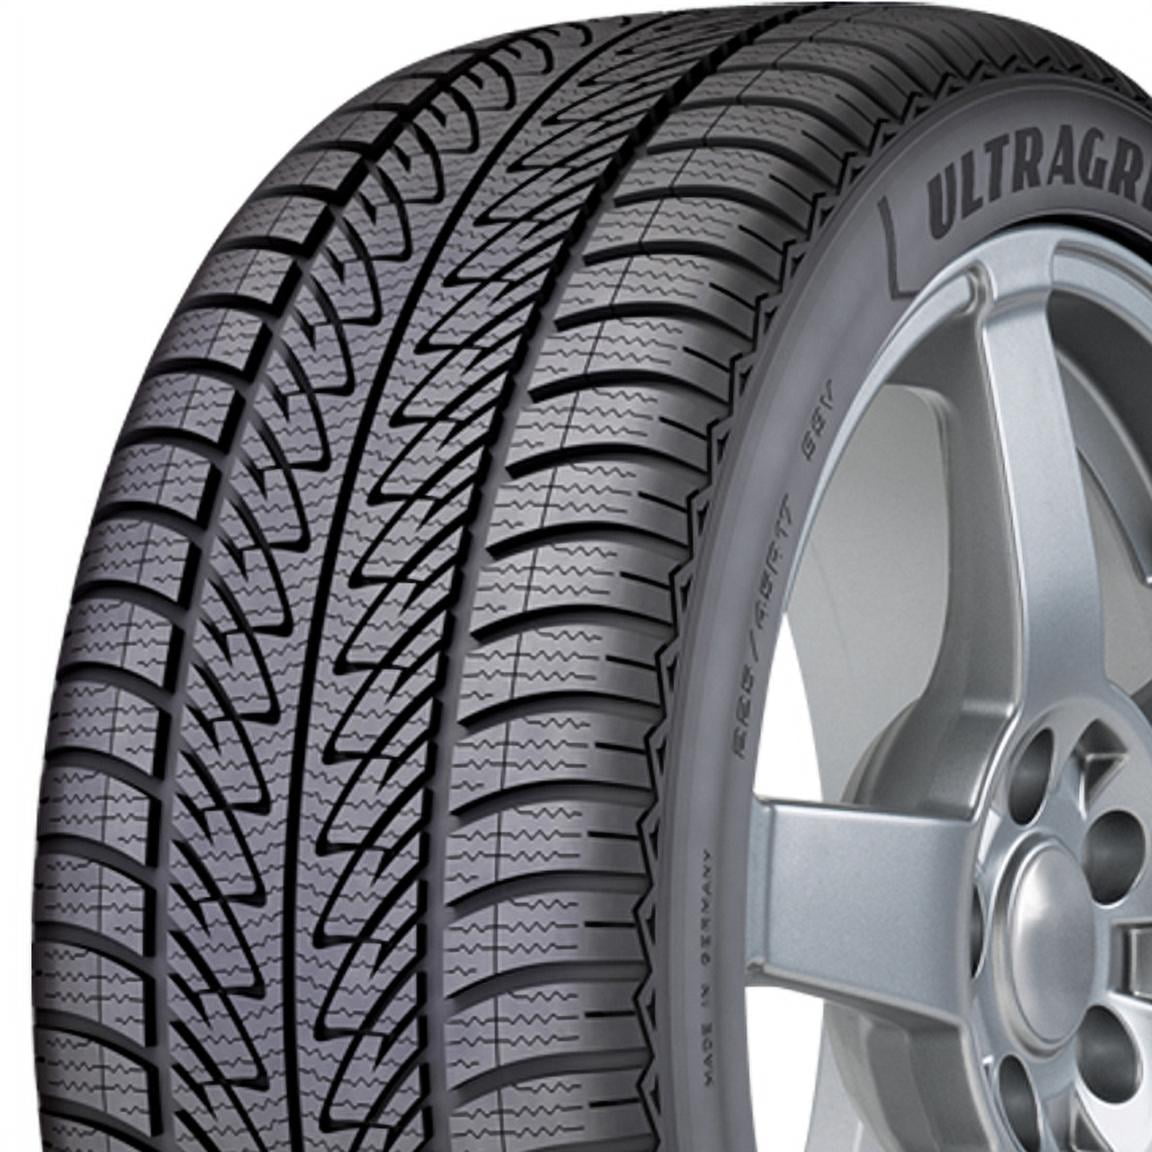 Goodyear ultra grip 8 performance P195/55R16 87H bsw winter tire Fits:  2003-06 Nissan Sentra SE-R, 2012 Nissan Versa 1.8 SL